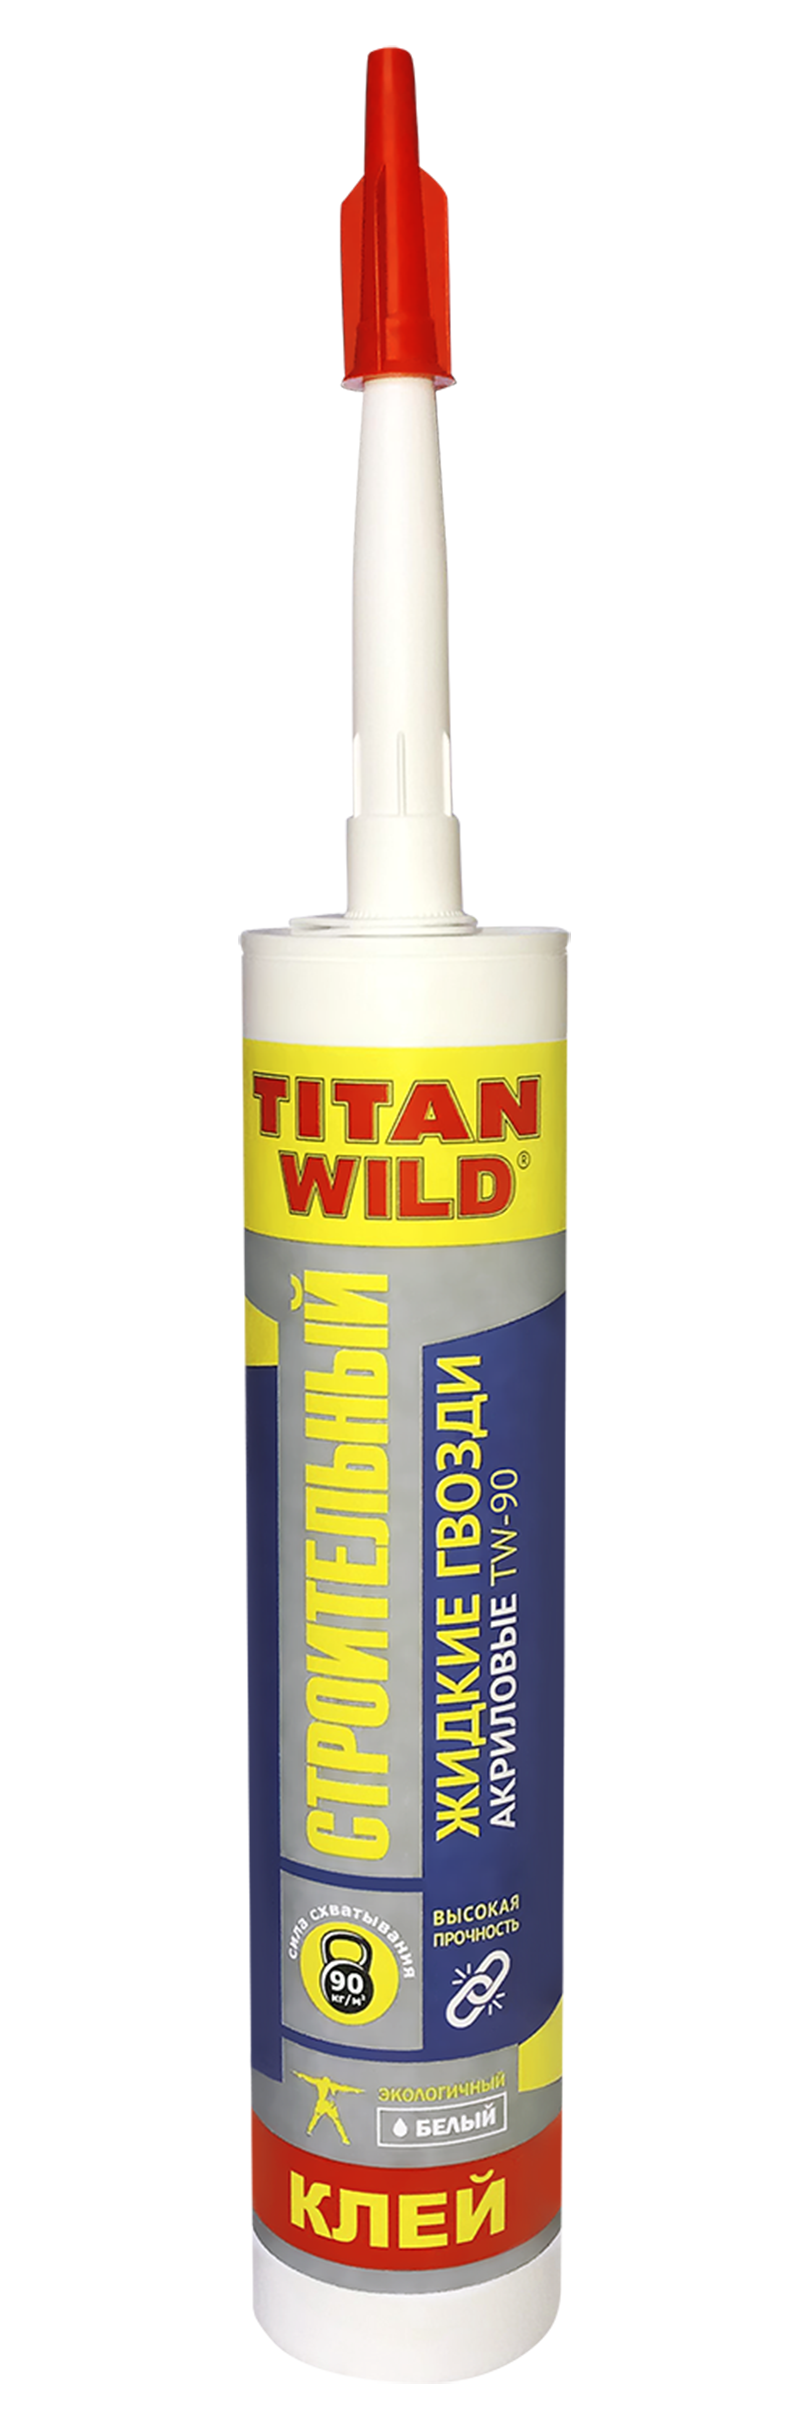 Титан вилд. Titan Wild жидкие гвозди. Жидкие гвозди экспресс 310мл, Titan Wild. Жидкие гвозди Титан универсал 310гр. Клей Титан универсальный.